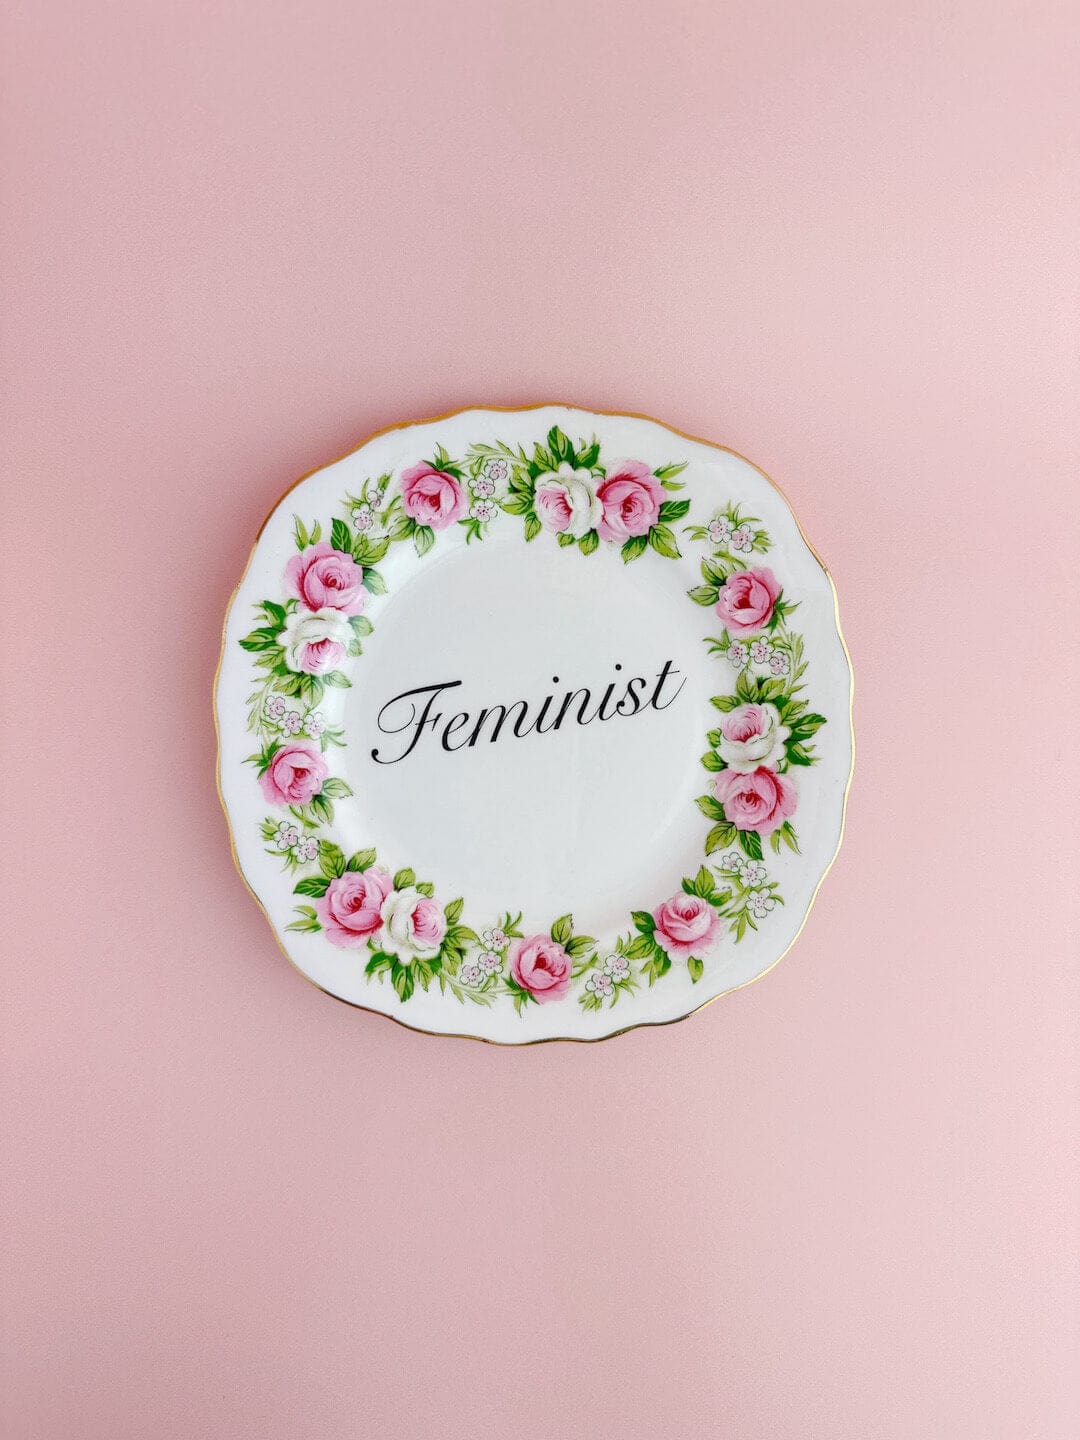 Beau & Badger Ceramics #91 Decorative Wall Plate - Feminist (multiple designs)